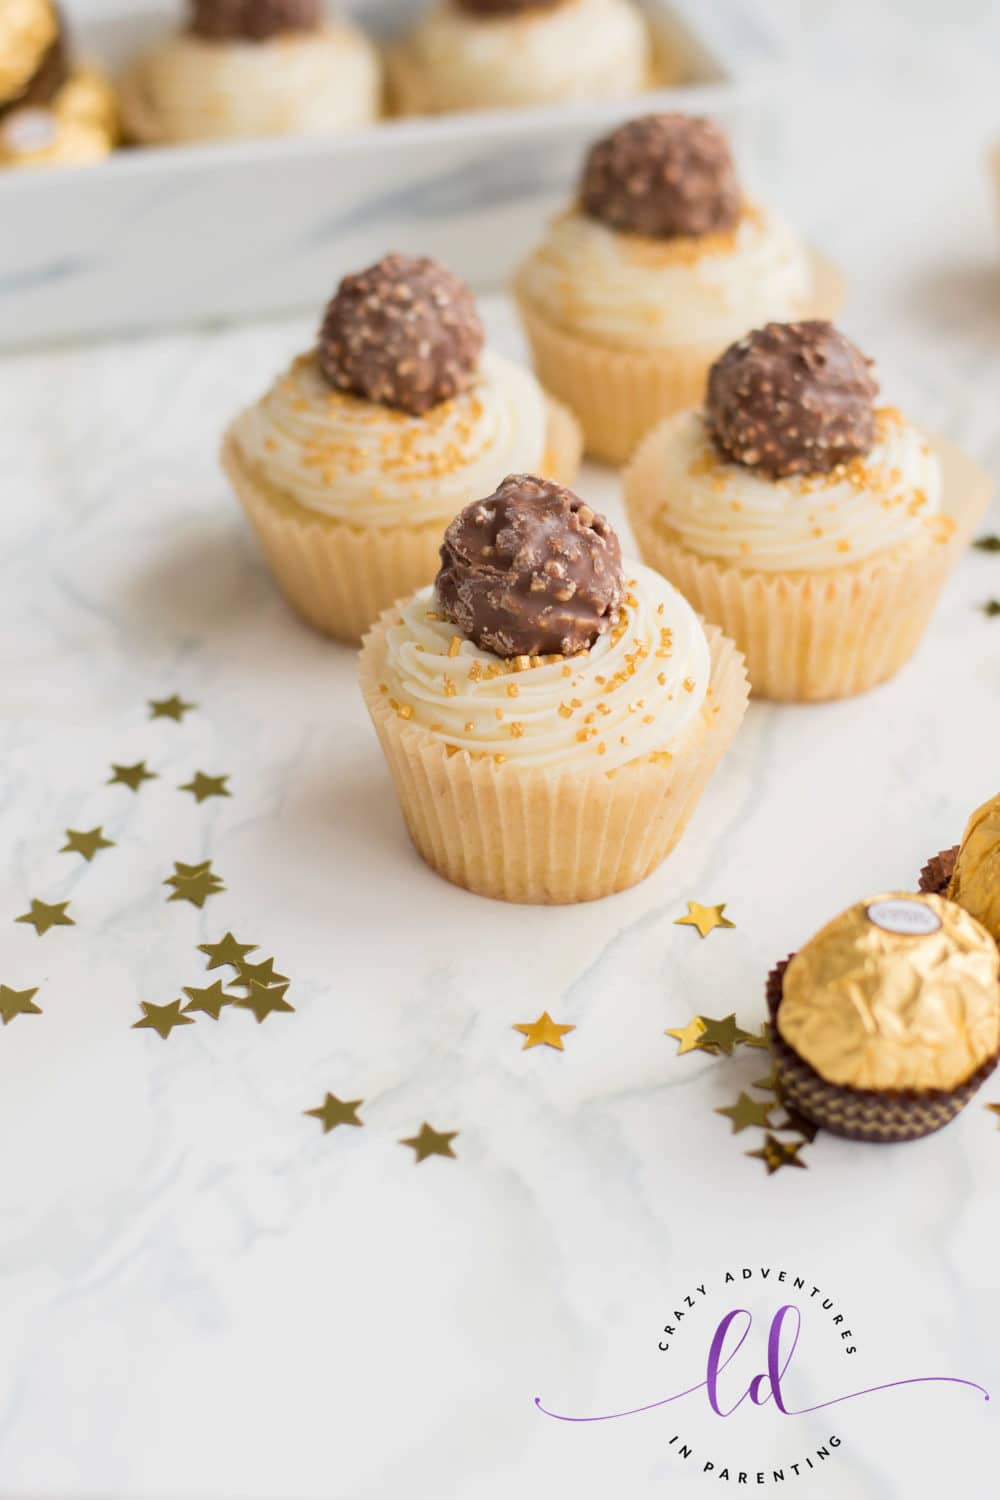 Golden Ferrero Rocher New Year's Eve Cupcakes Recipe